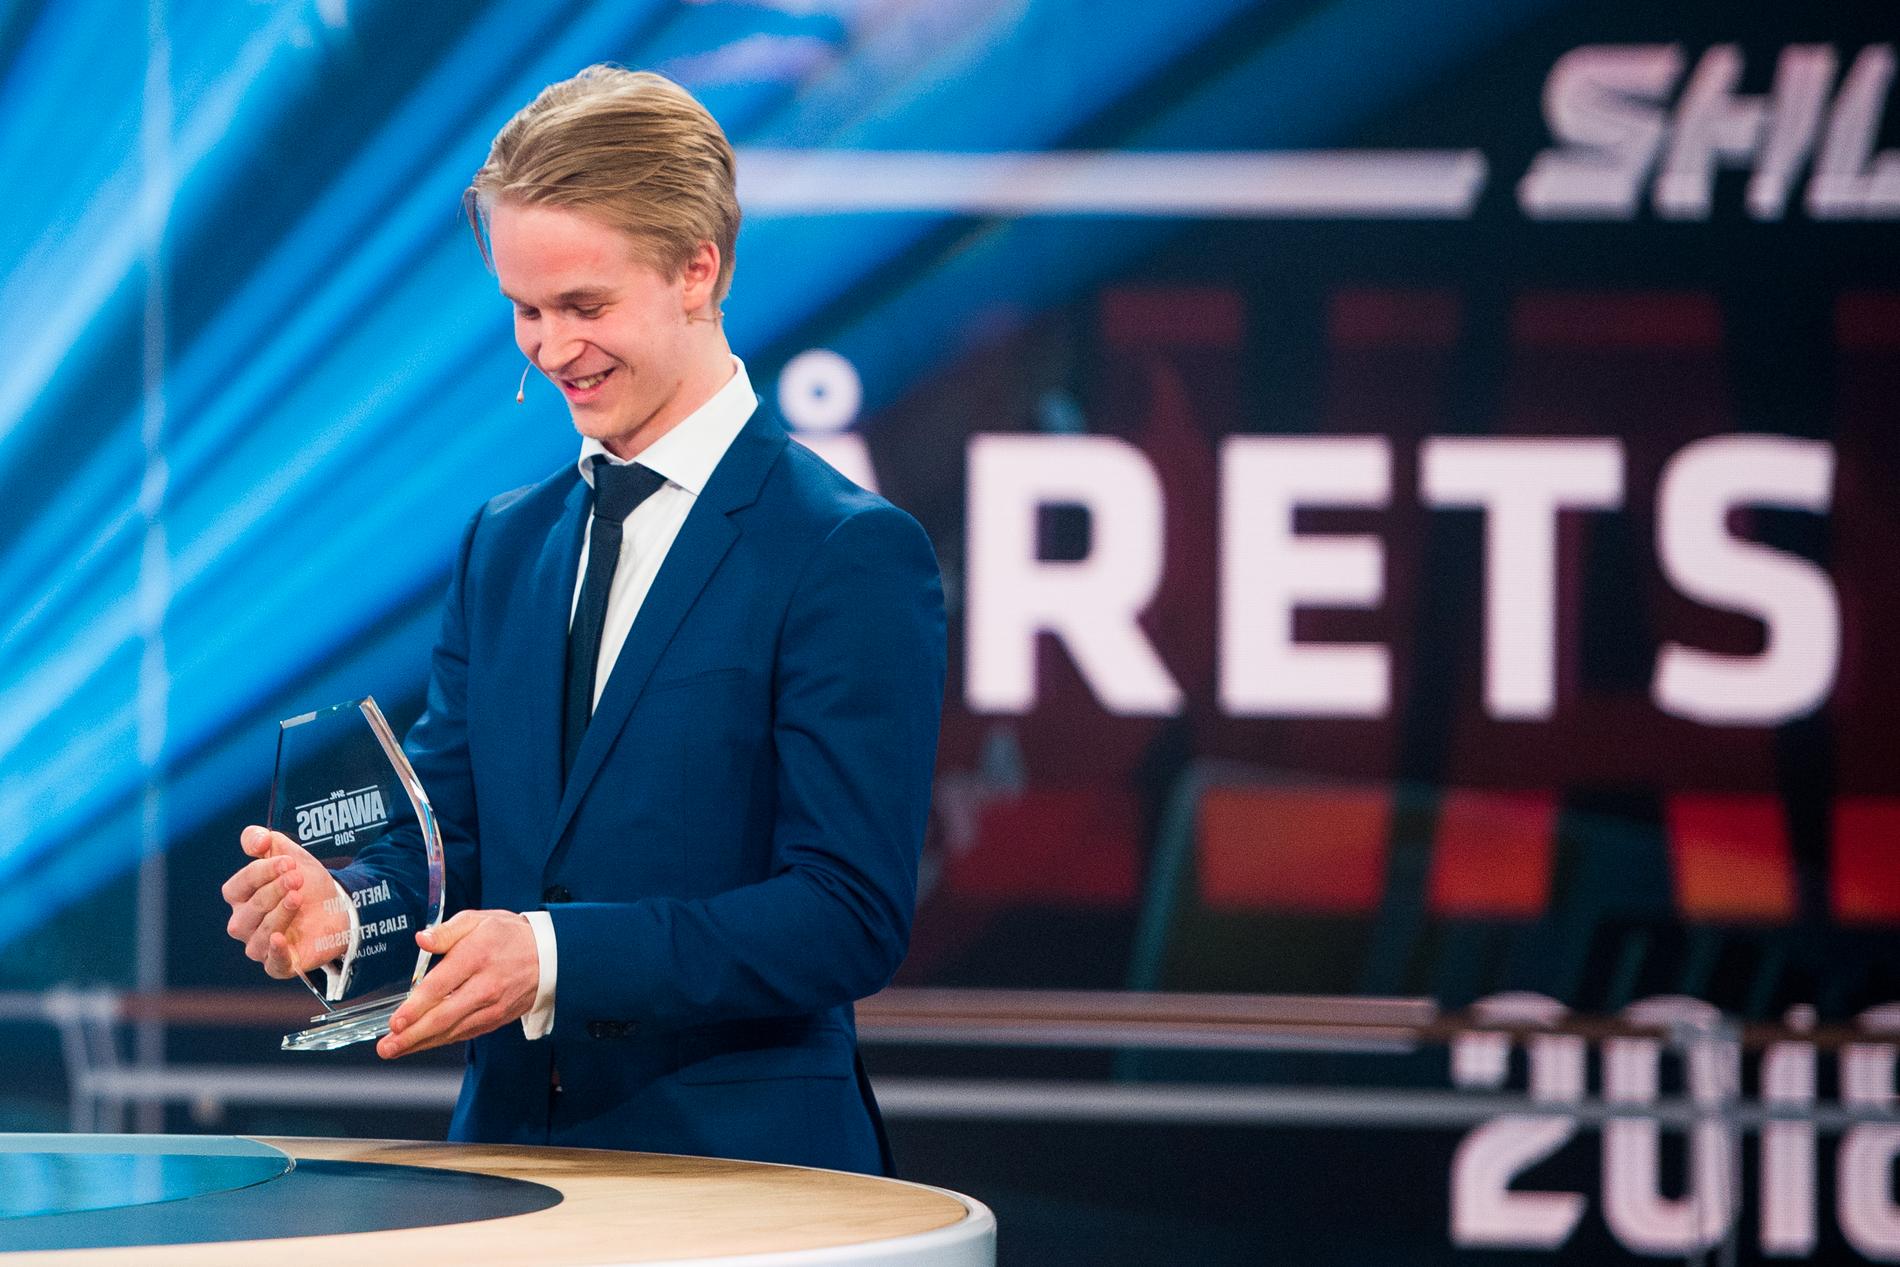 Efter guldsuccén med Växjö prisades Pettersson som ligans MVP (most valuable player) på SHL awards.